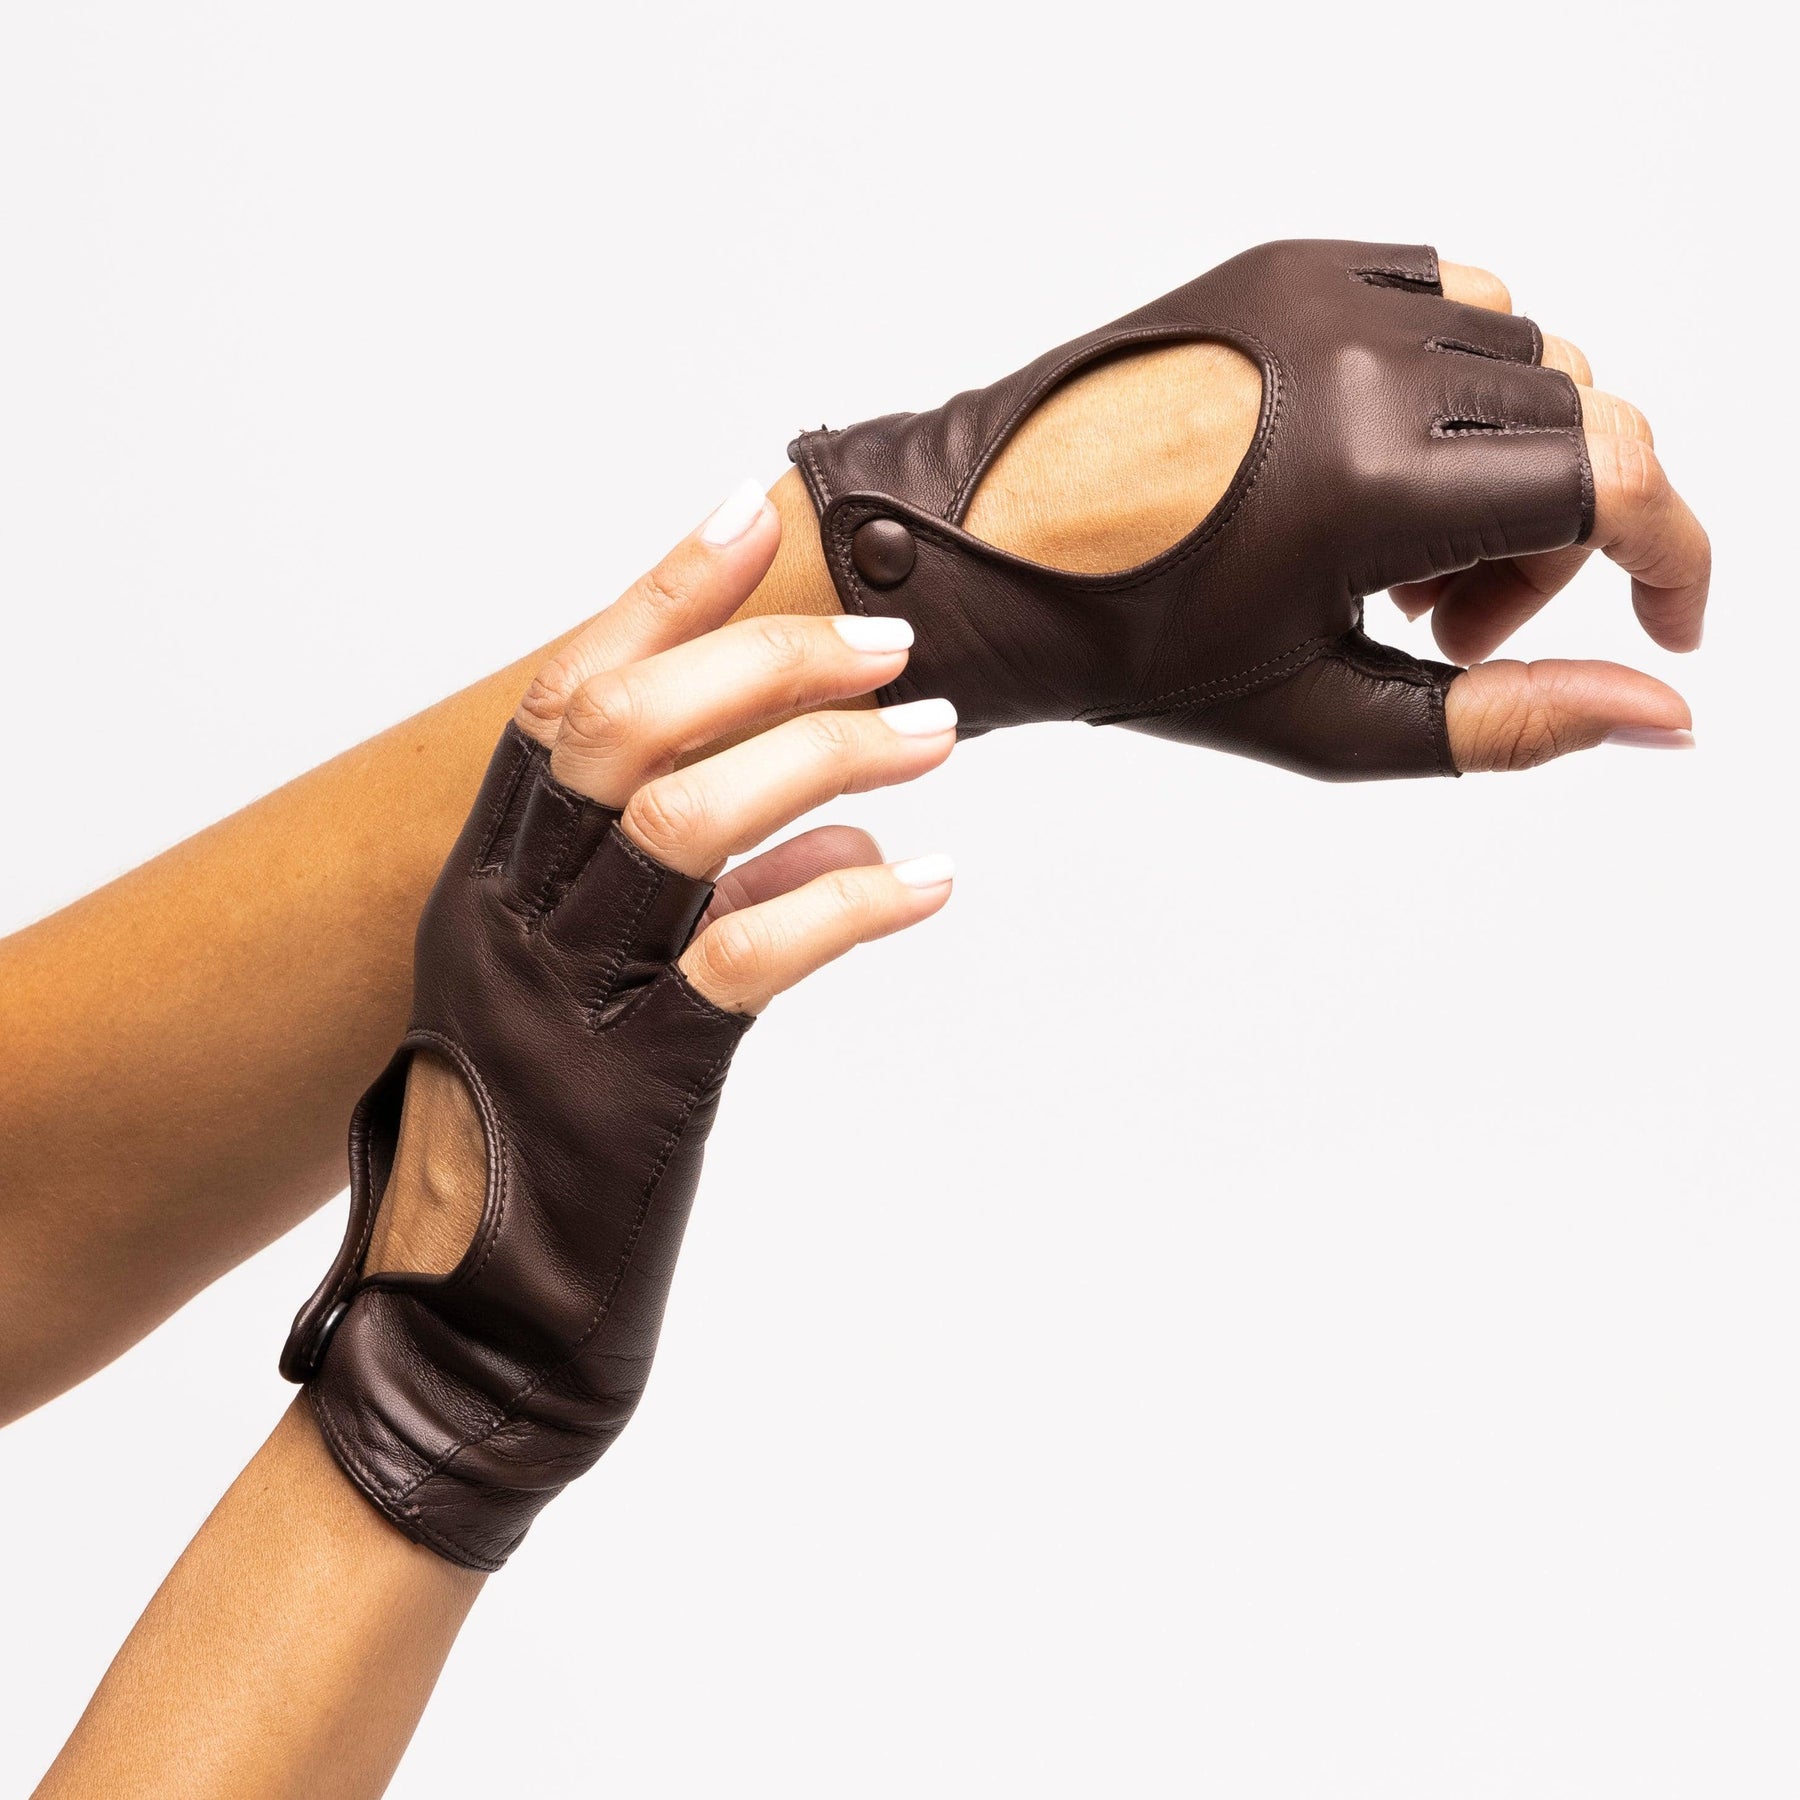 Fingerless Driving Gloves Dark Brown, Handcrafted